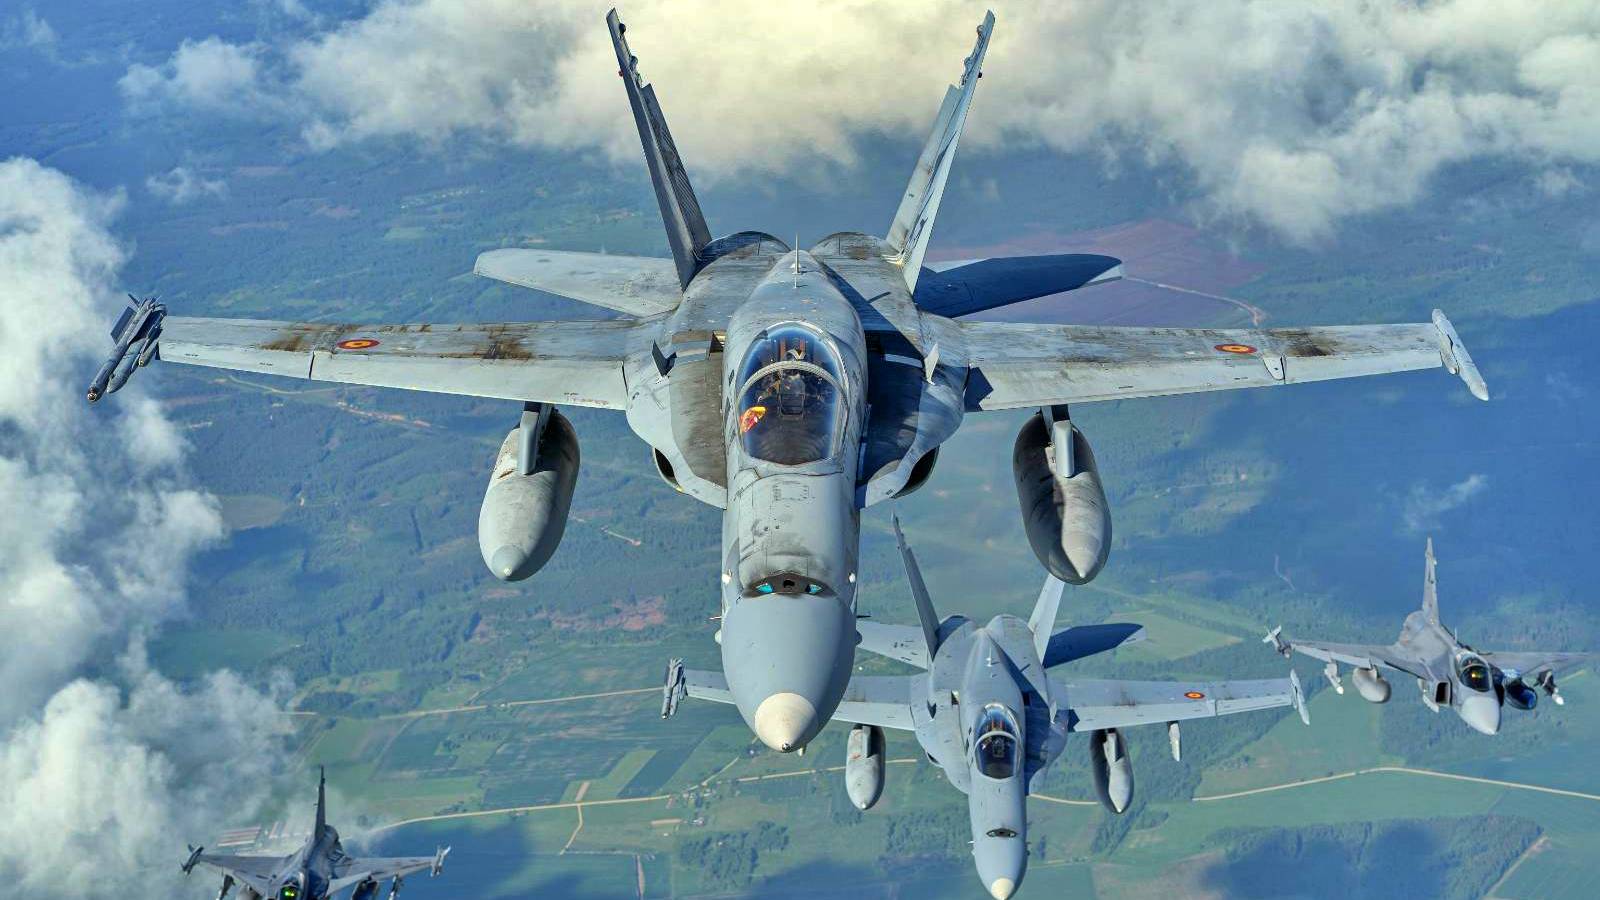 NATO Prezinta Aeronavele Protejeaza Spatiul Aerian Europei